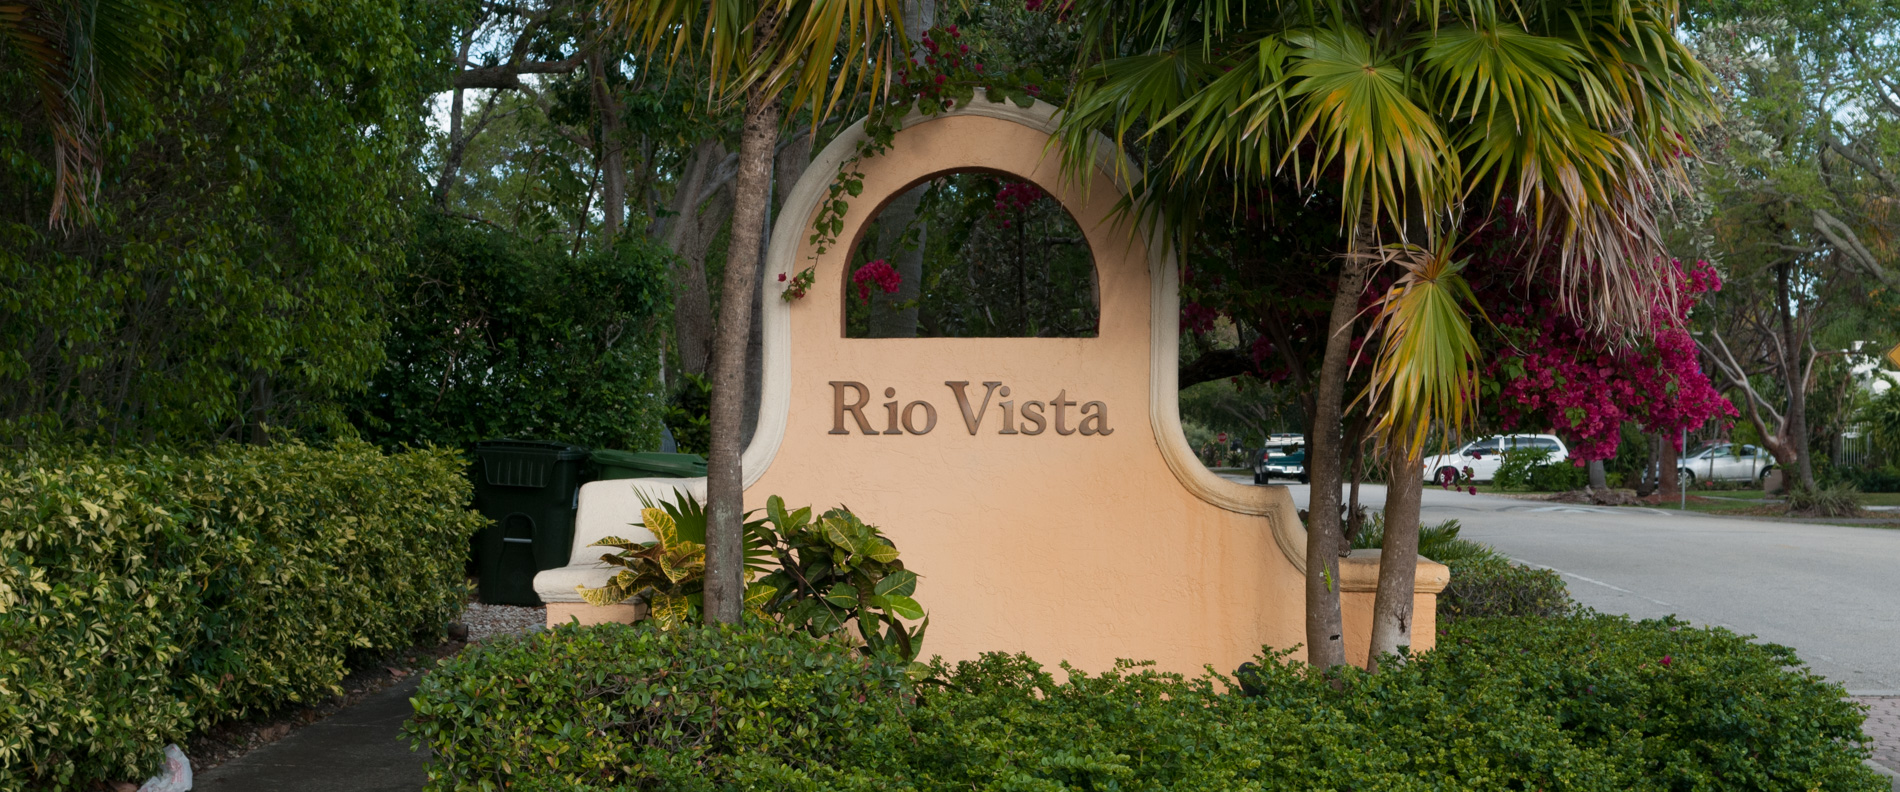 Rio Vista Fort Lauderdale Neighborhood